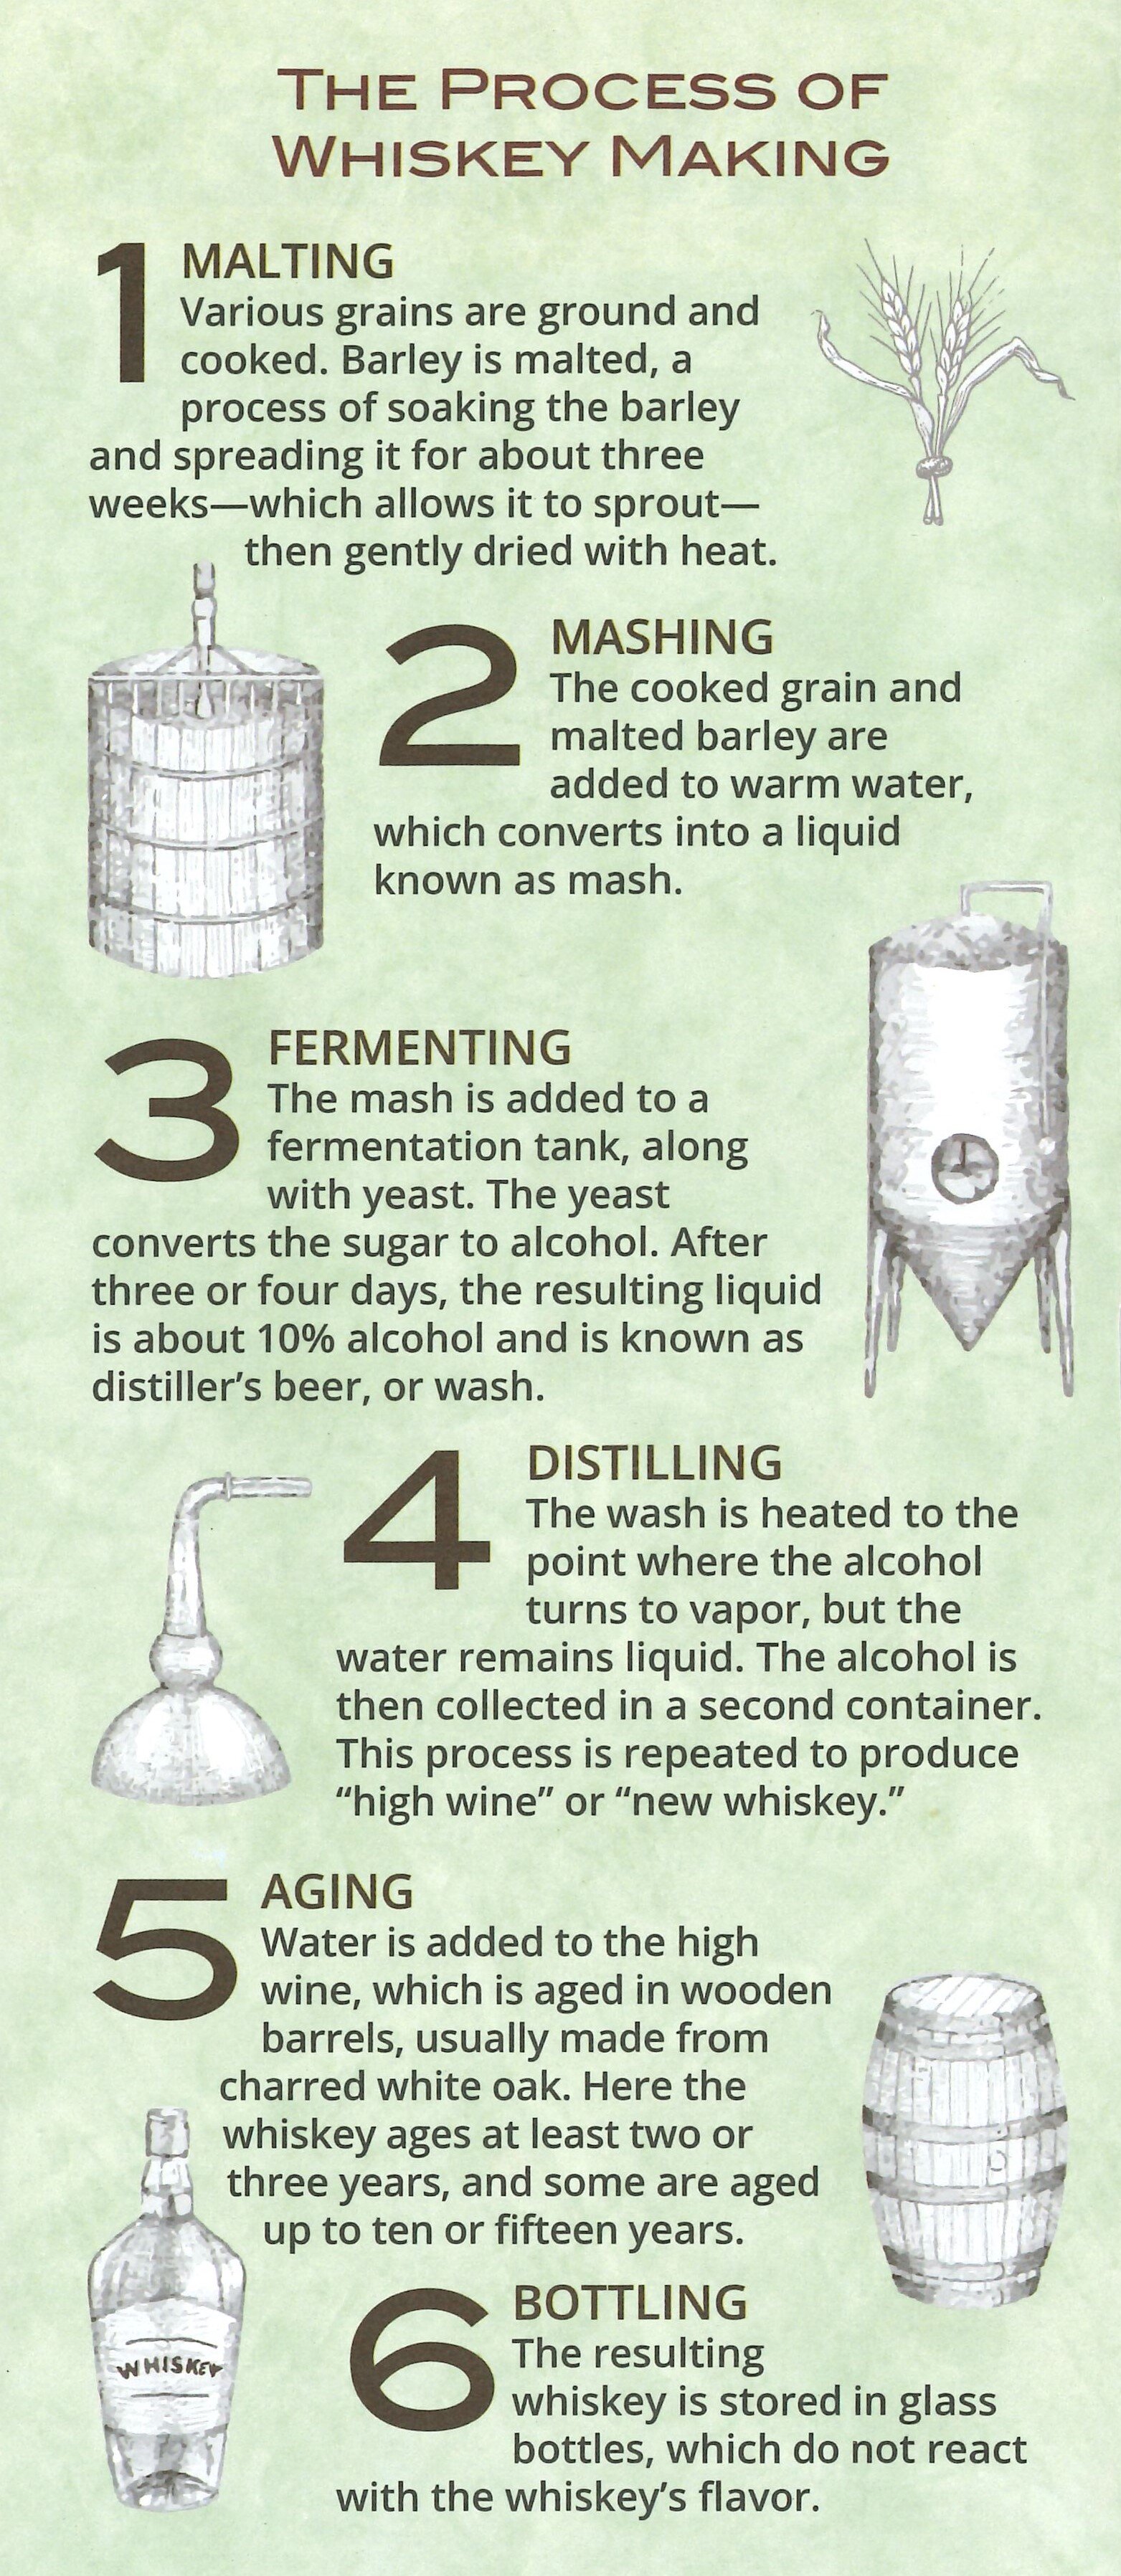 The 3 Steps of Distilling Alcohol – Fermentation